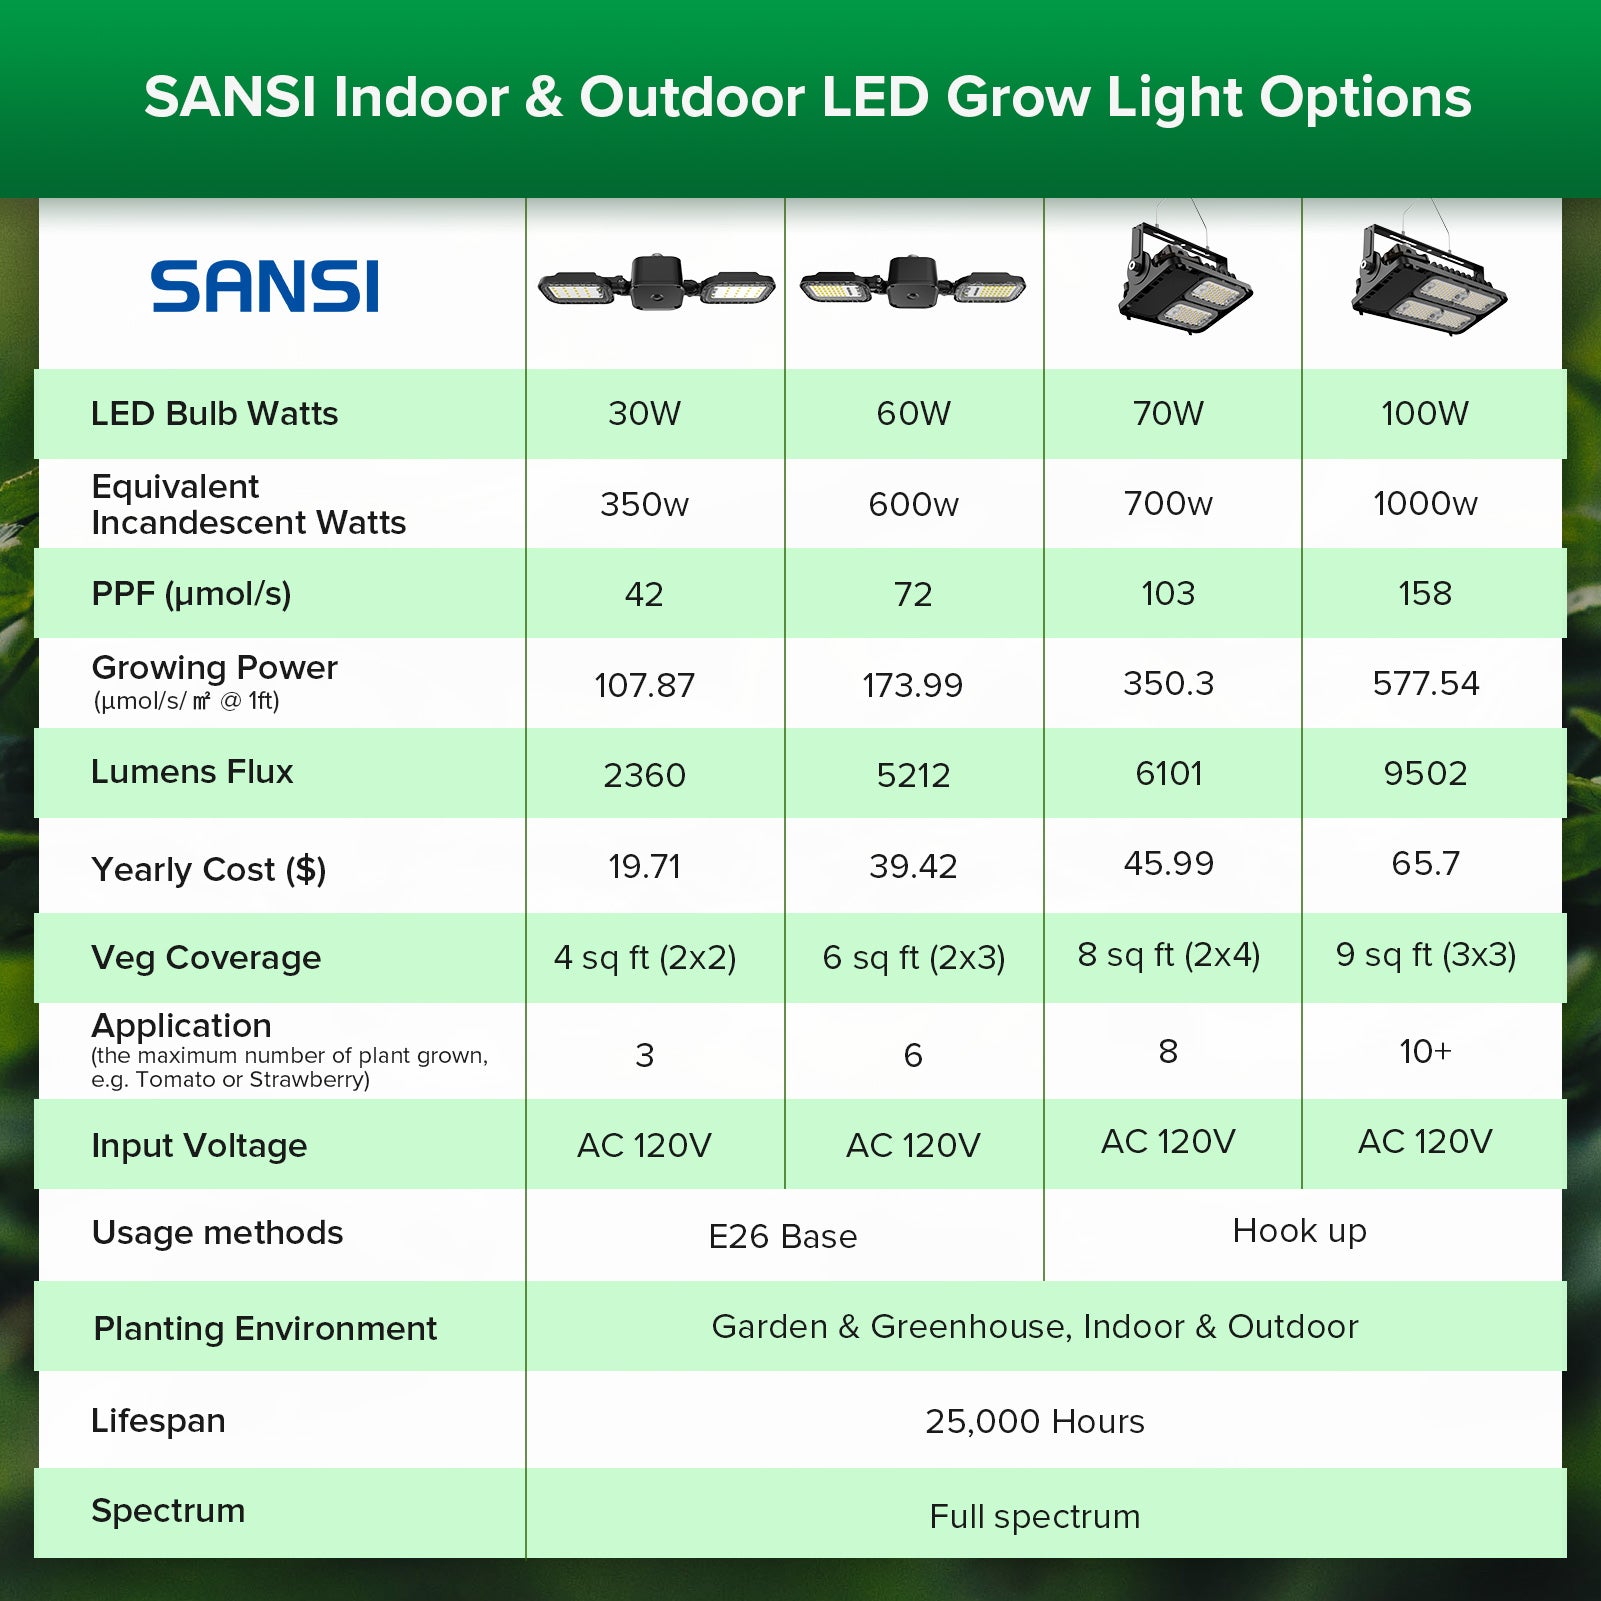 SANSI Indoor & Outdoor LED Grow Light Options.